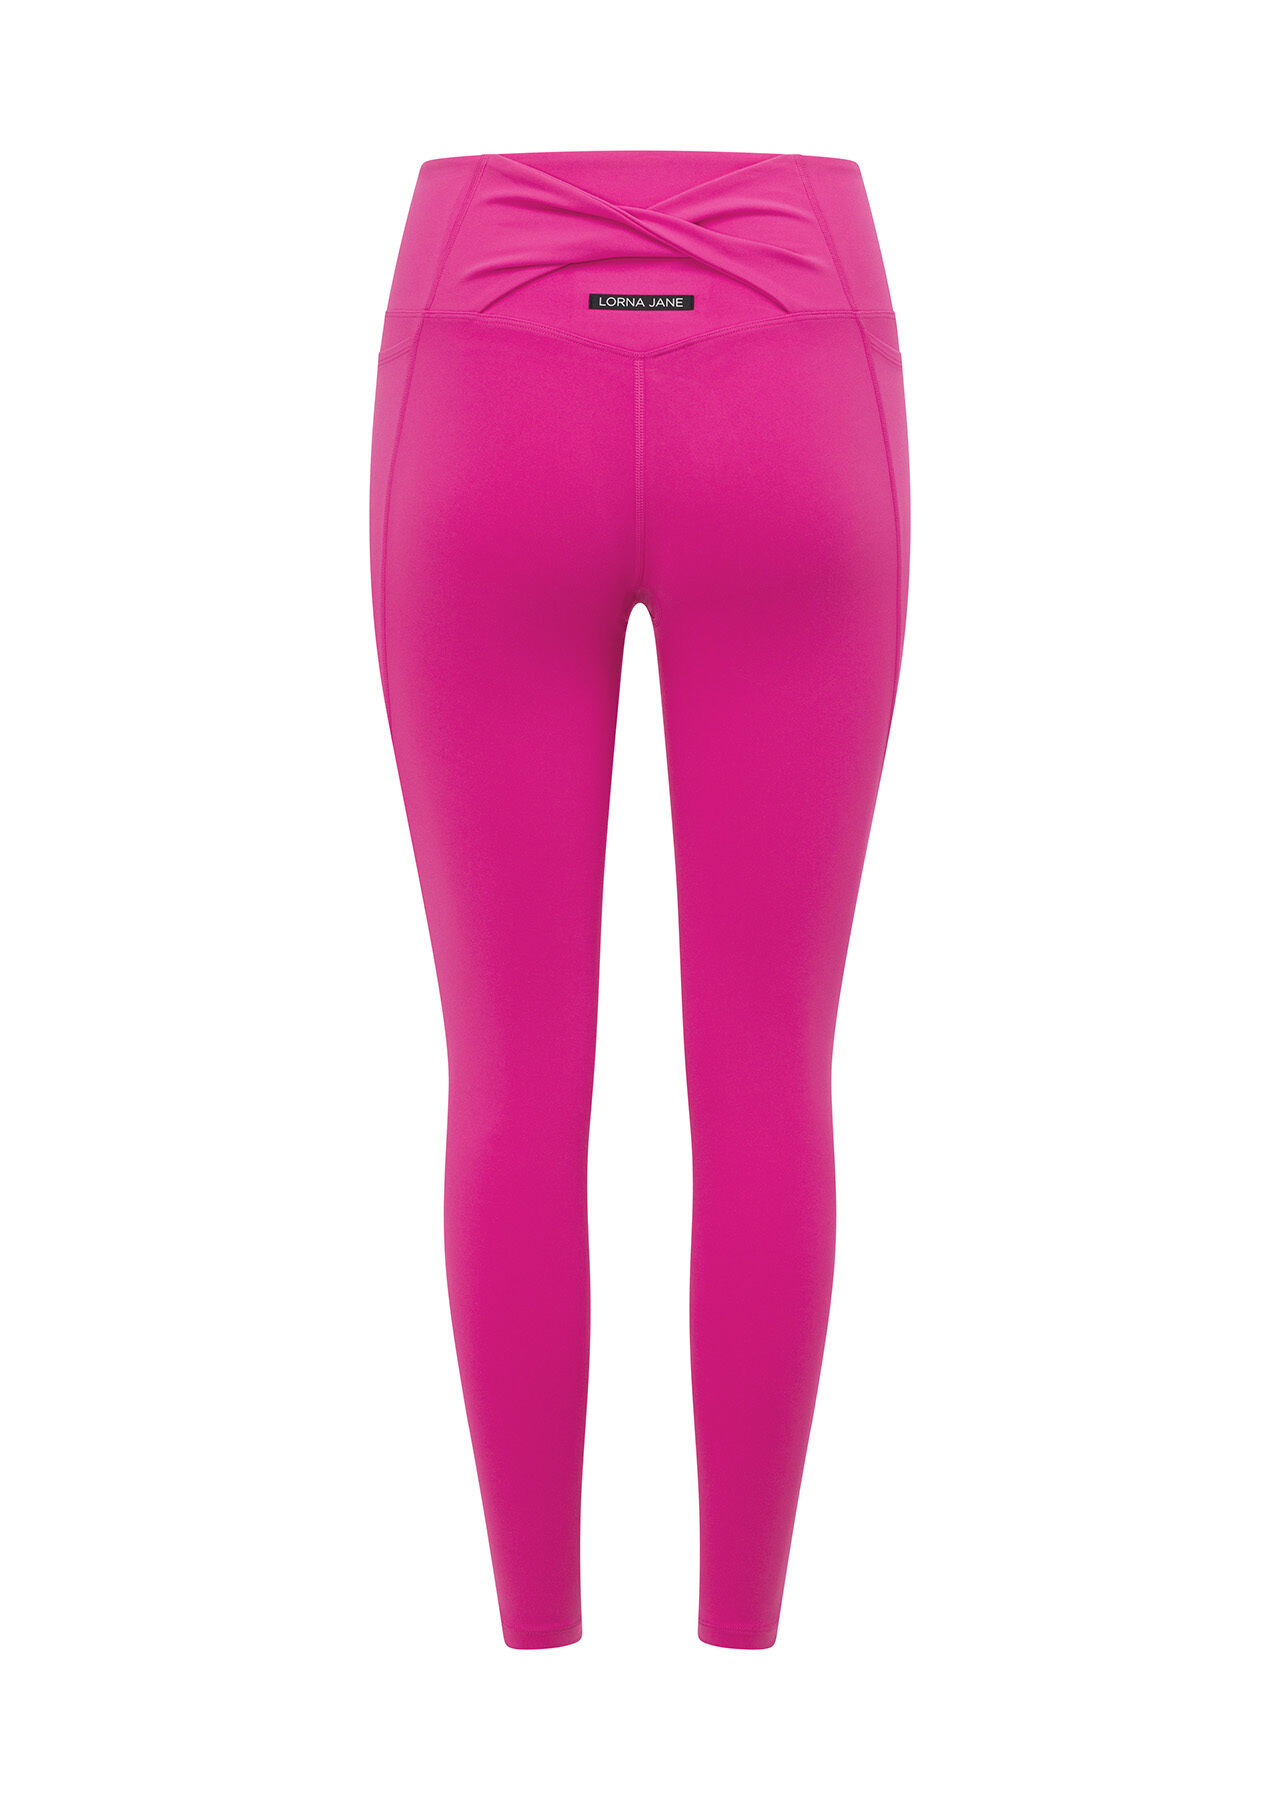 Hoxton Haus seamless gym leggings in hot pink - part of a set | ASOS